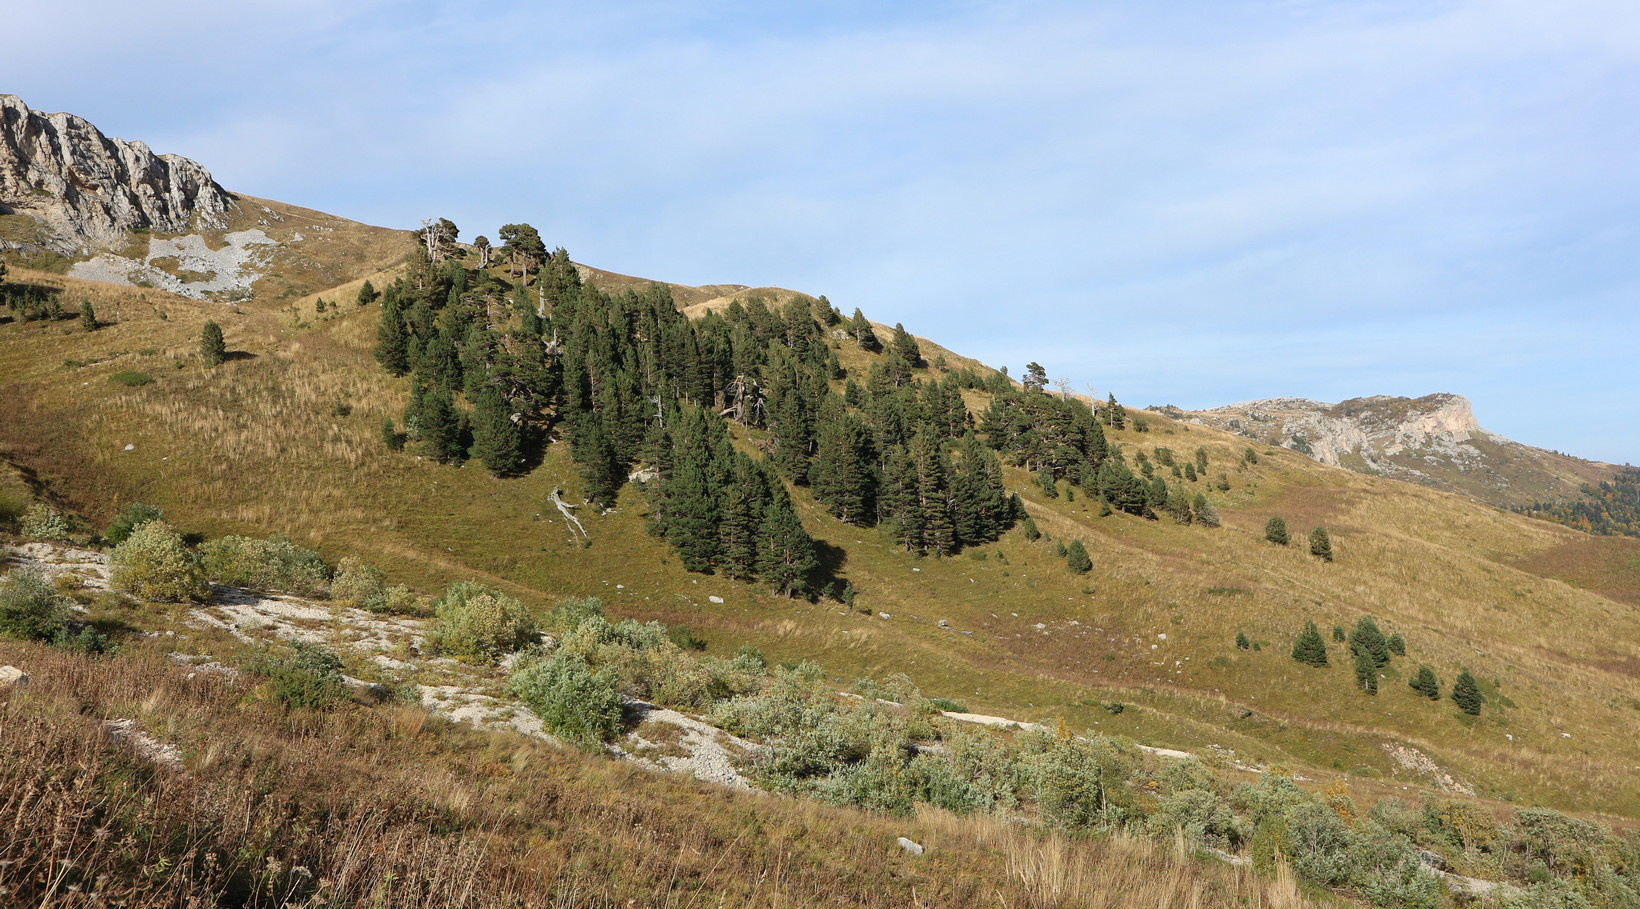 Узуруб, image of landscape/habitat.